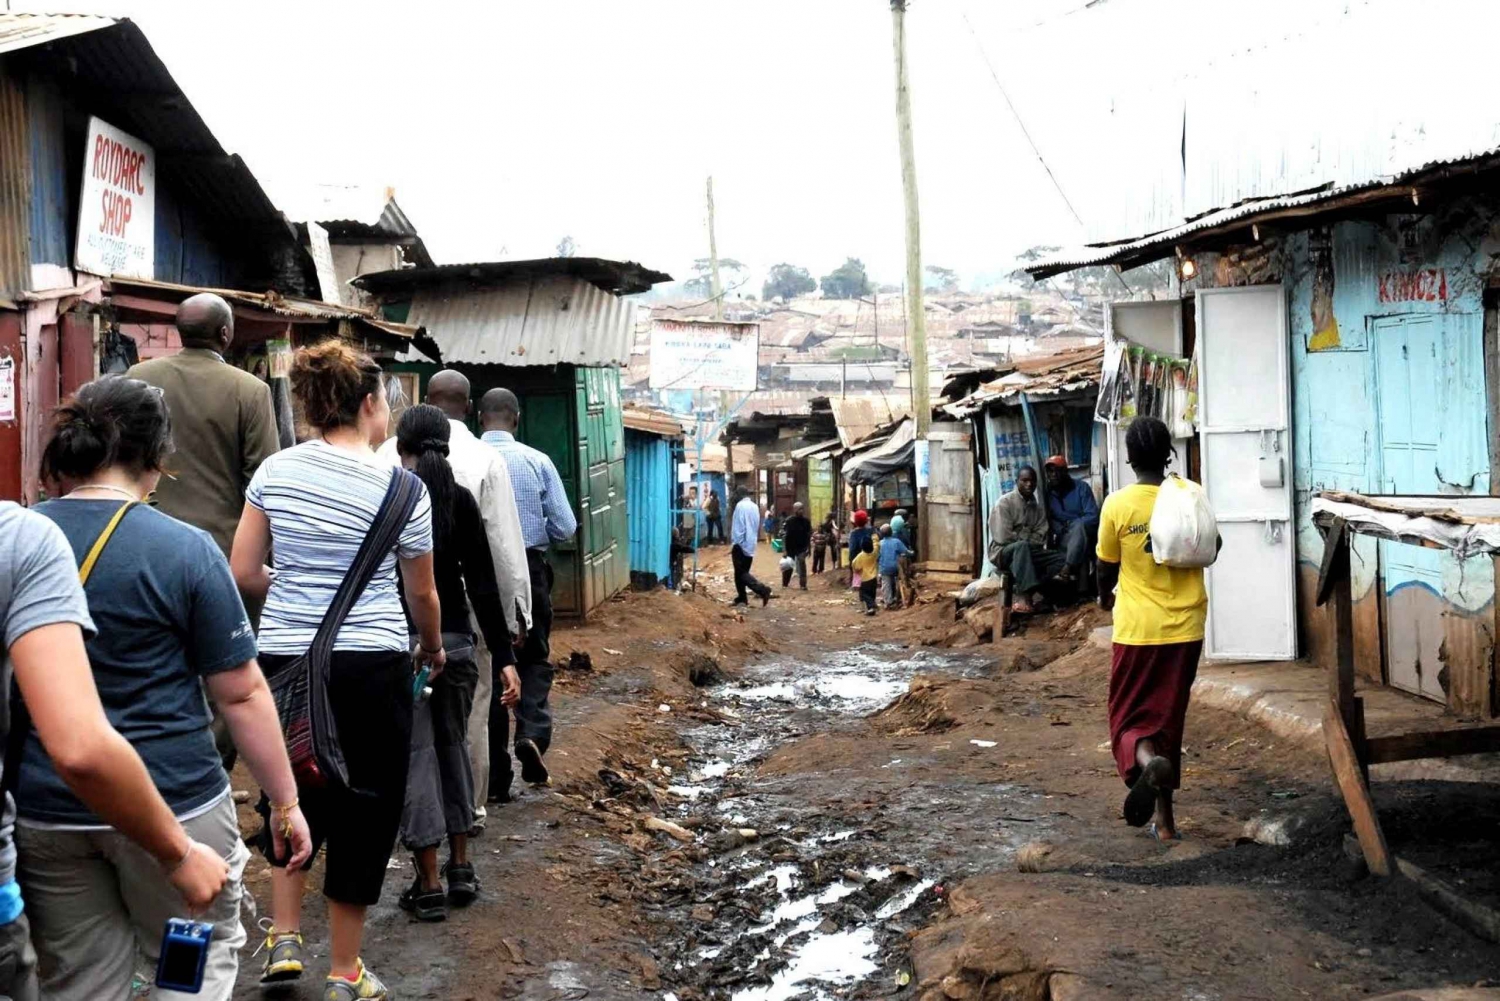 Vandringstur i slummen i Kibera